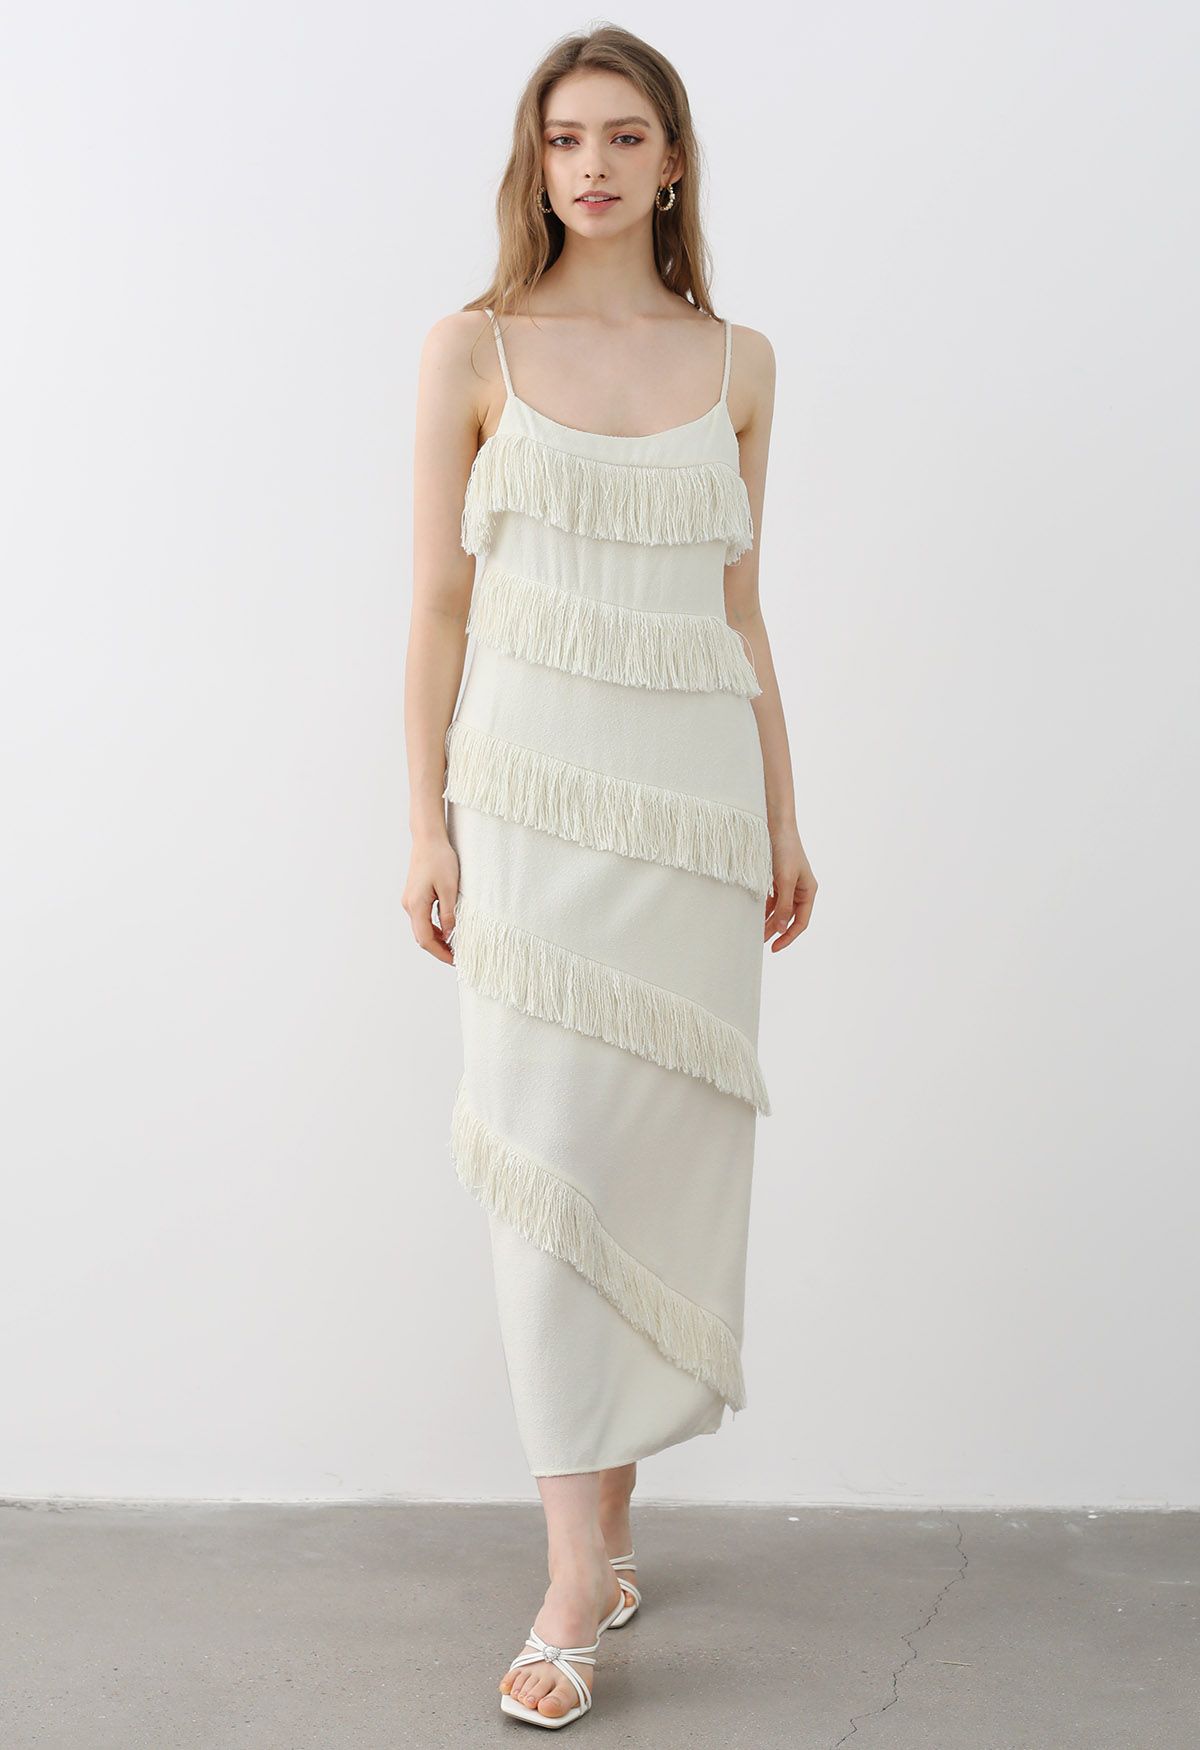 Playful Fringe Textured Cami Dress in Cream